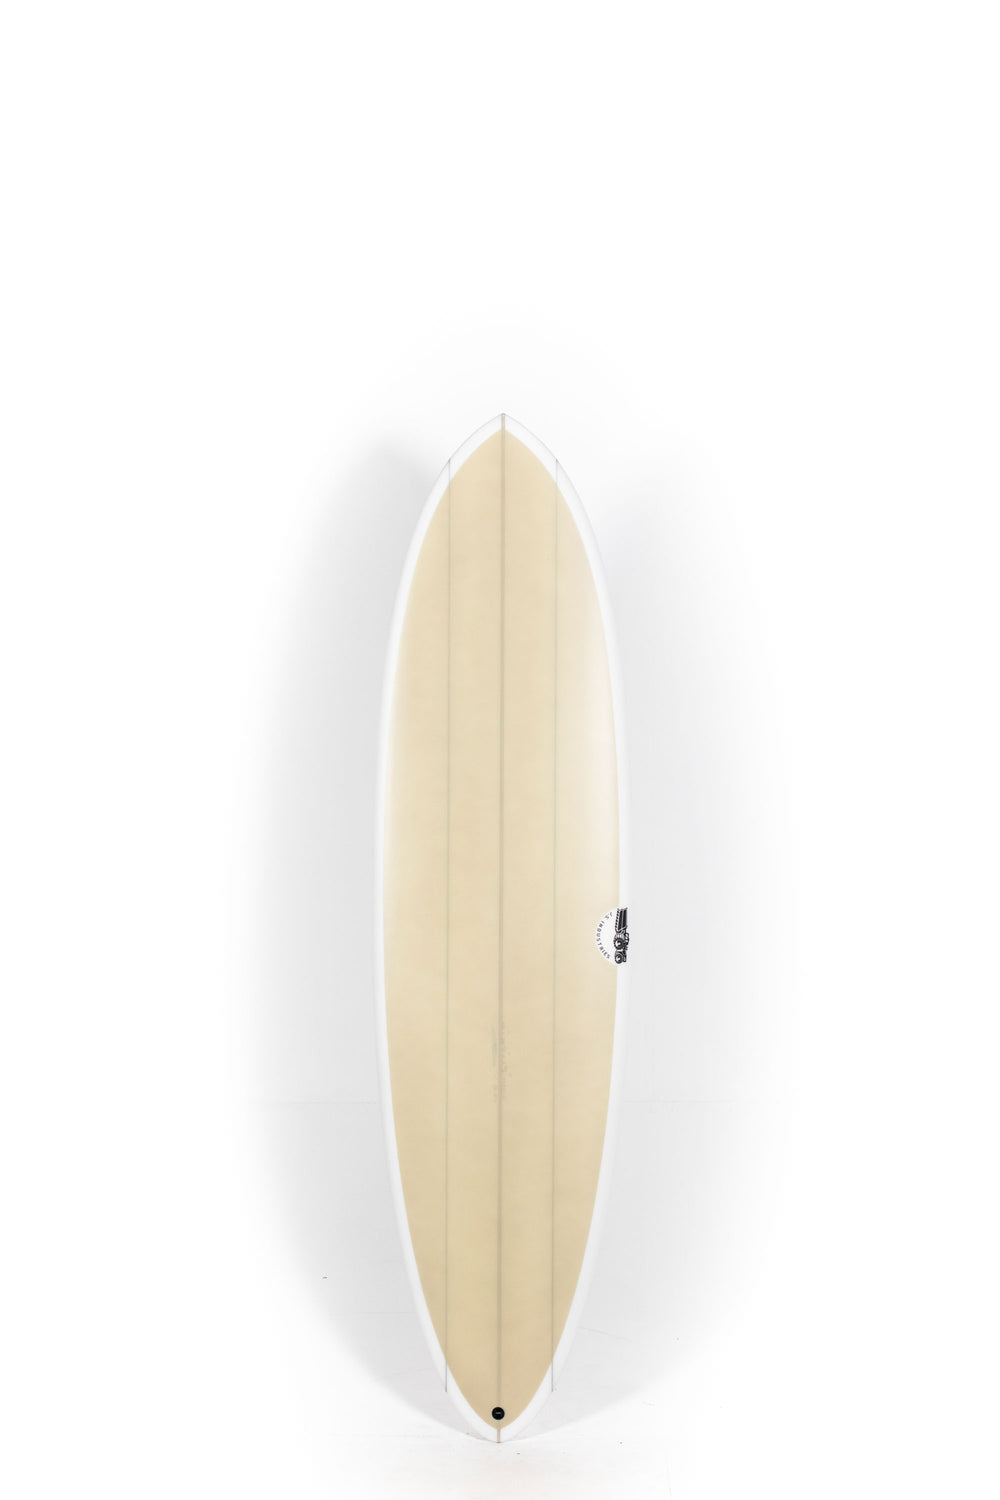 Pukas Surf Shop - JS Surfboards - BIG BARON - 6'6